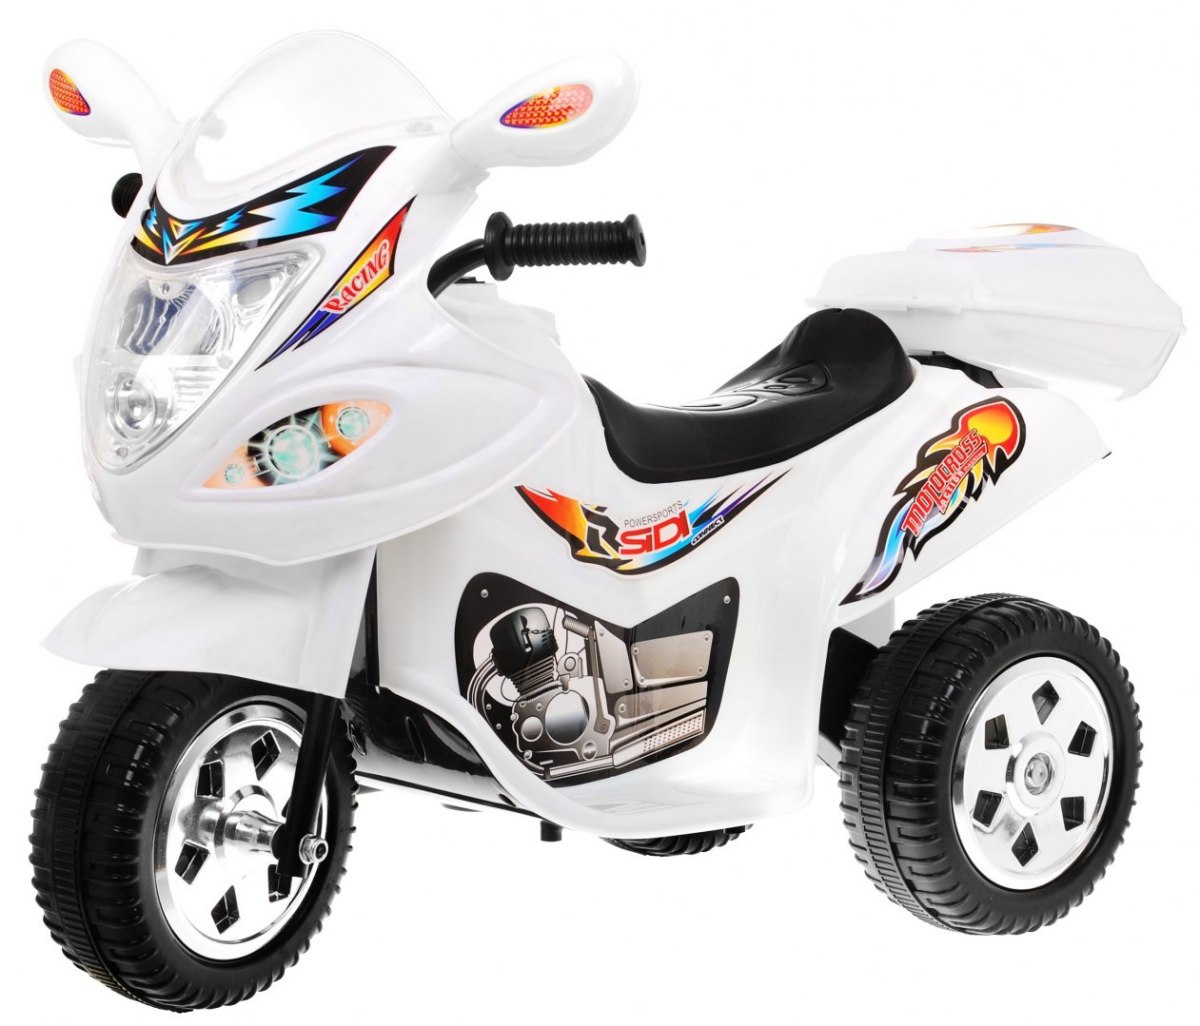 Dětská elektrická motorka Speed Bílá